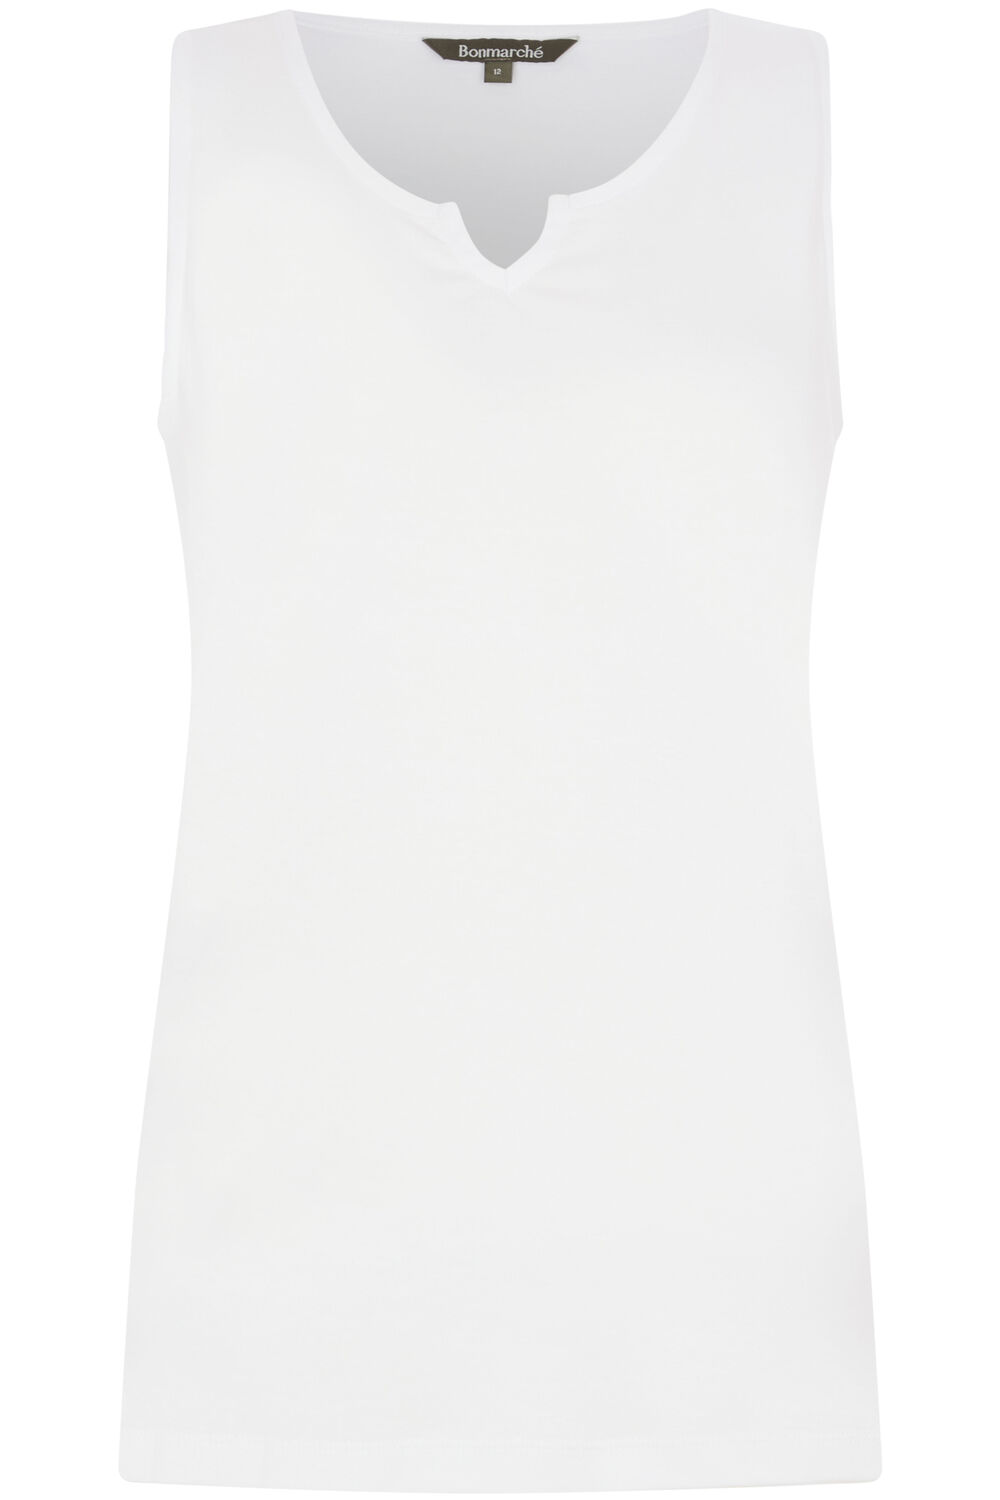 Bonmarche White Plain Notch Neck Vest, Size: 14